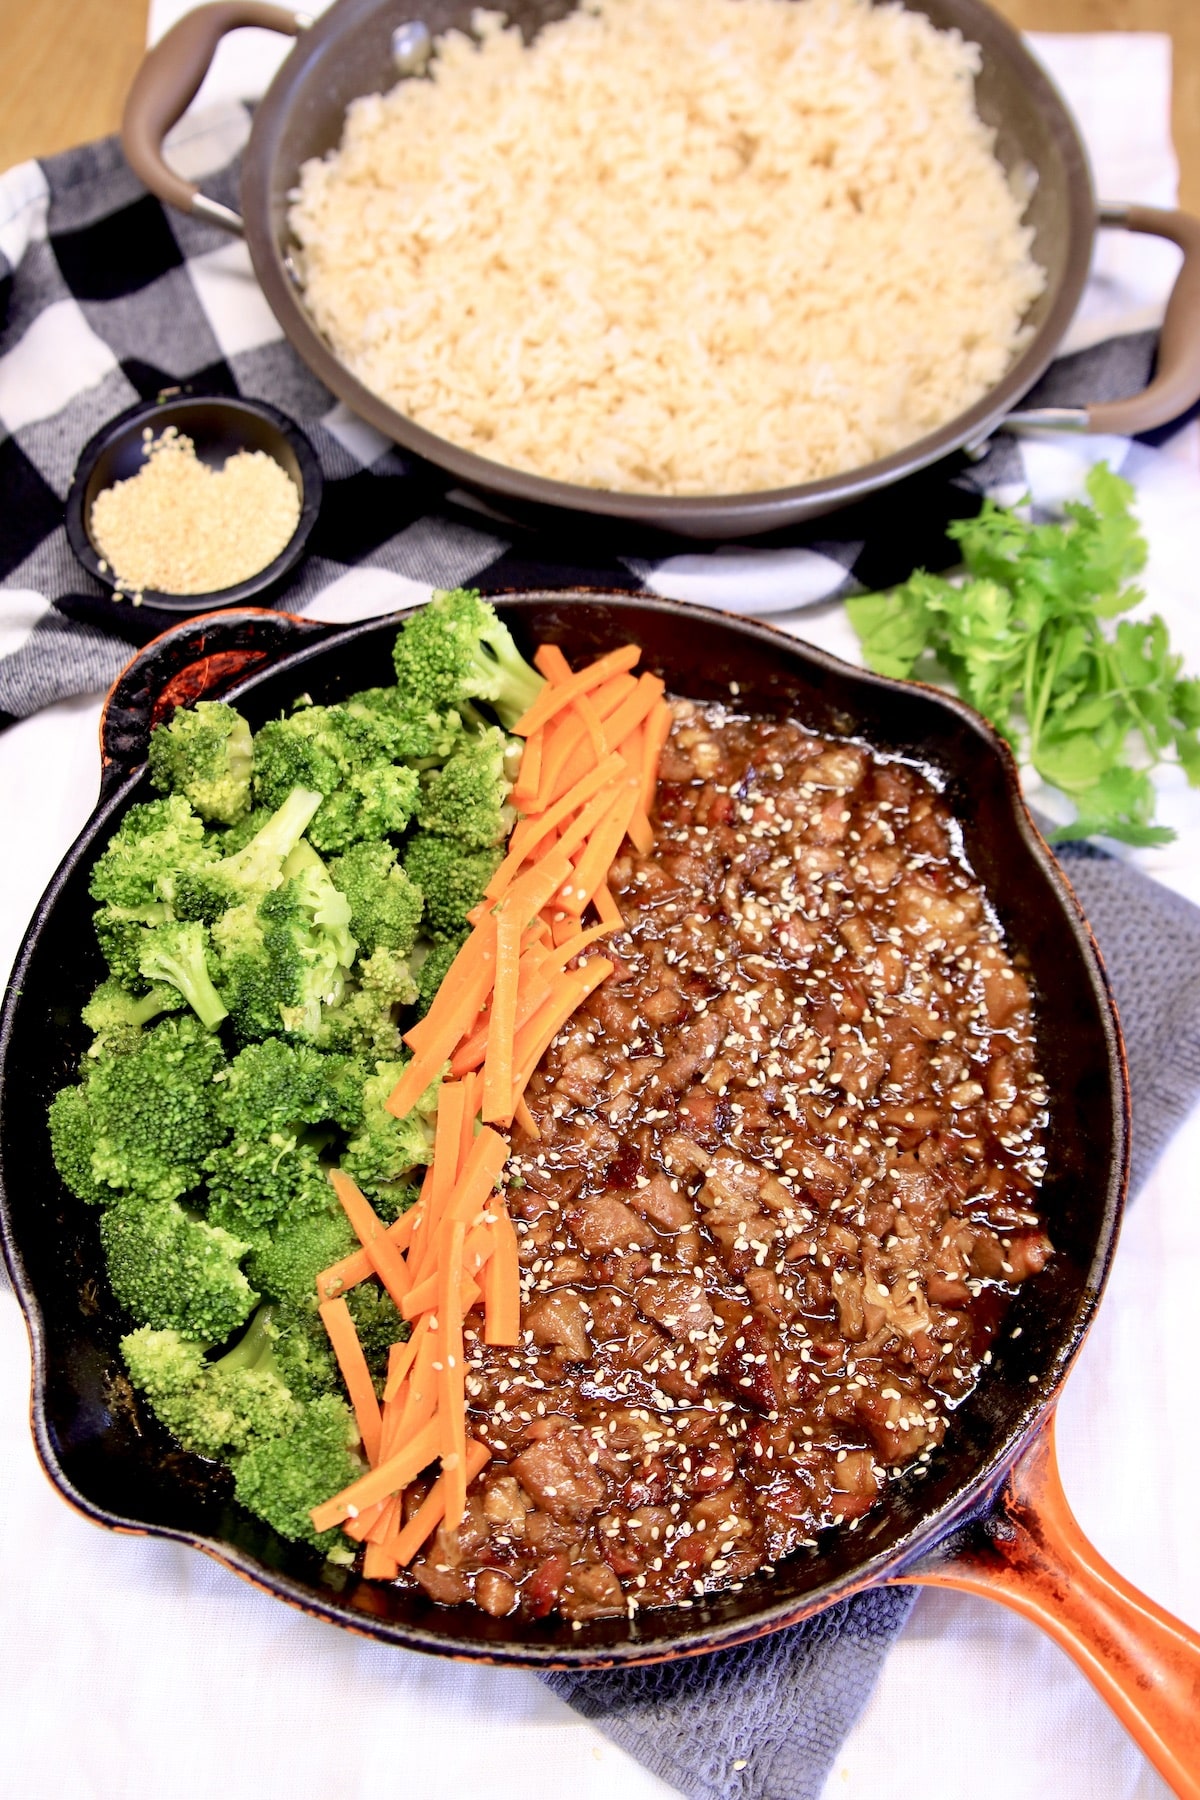 Skillet with Mongolian pork, broccoli, carrots.